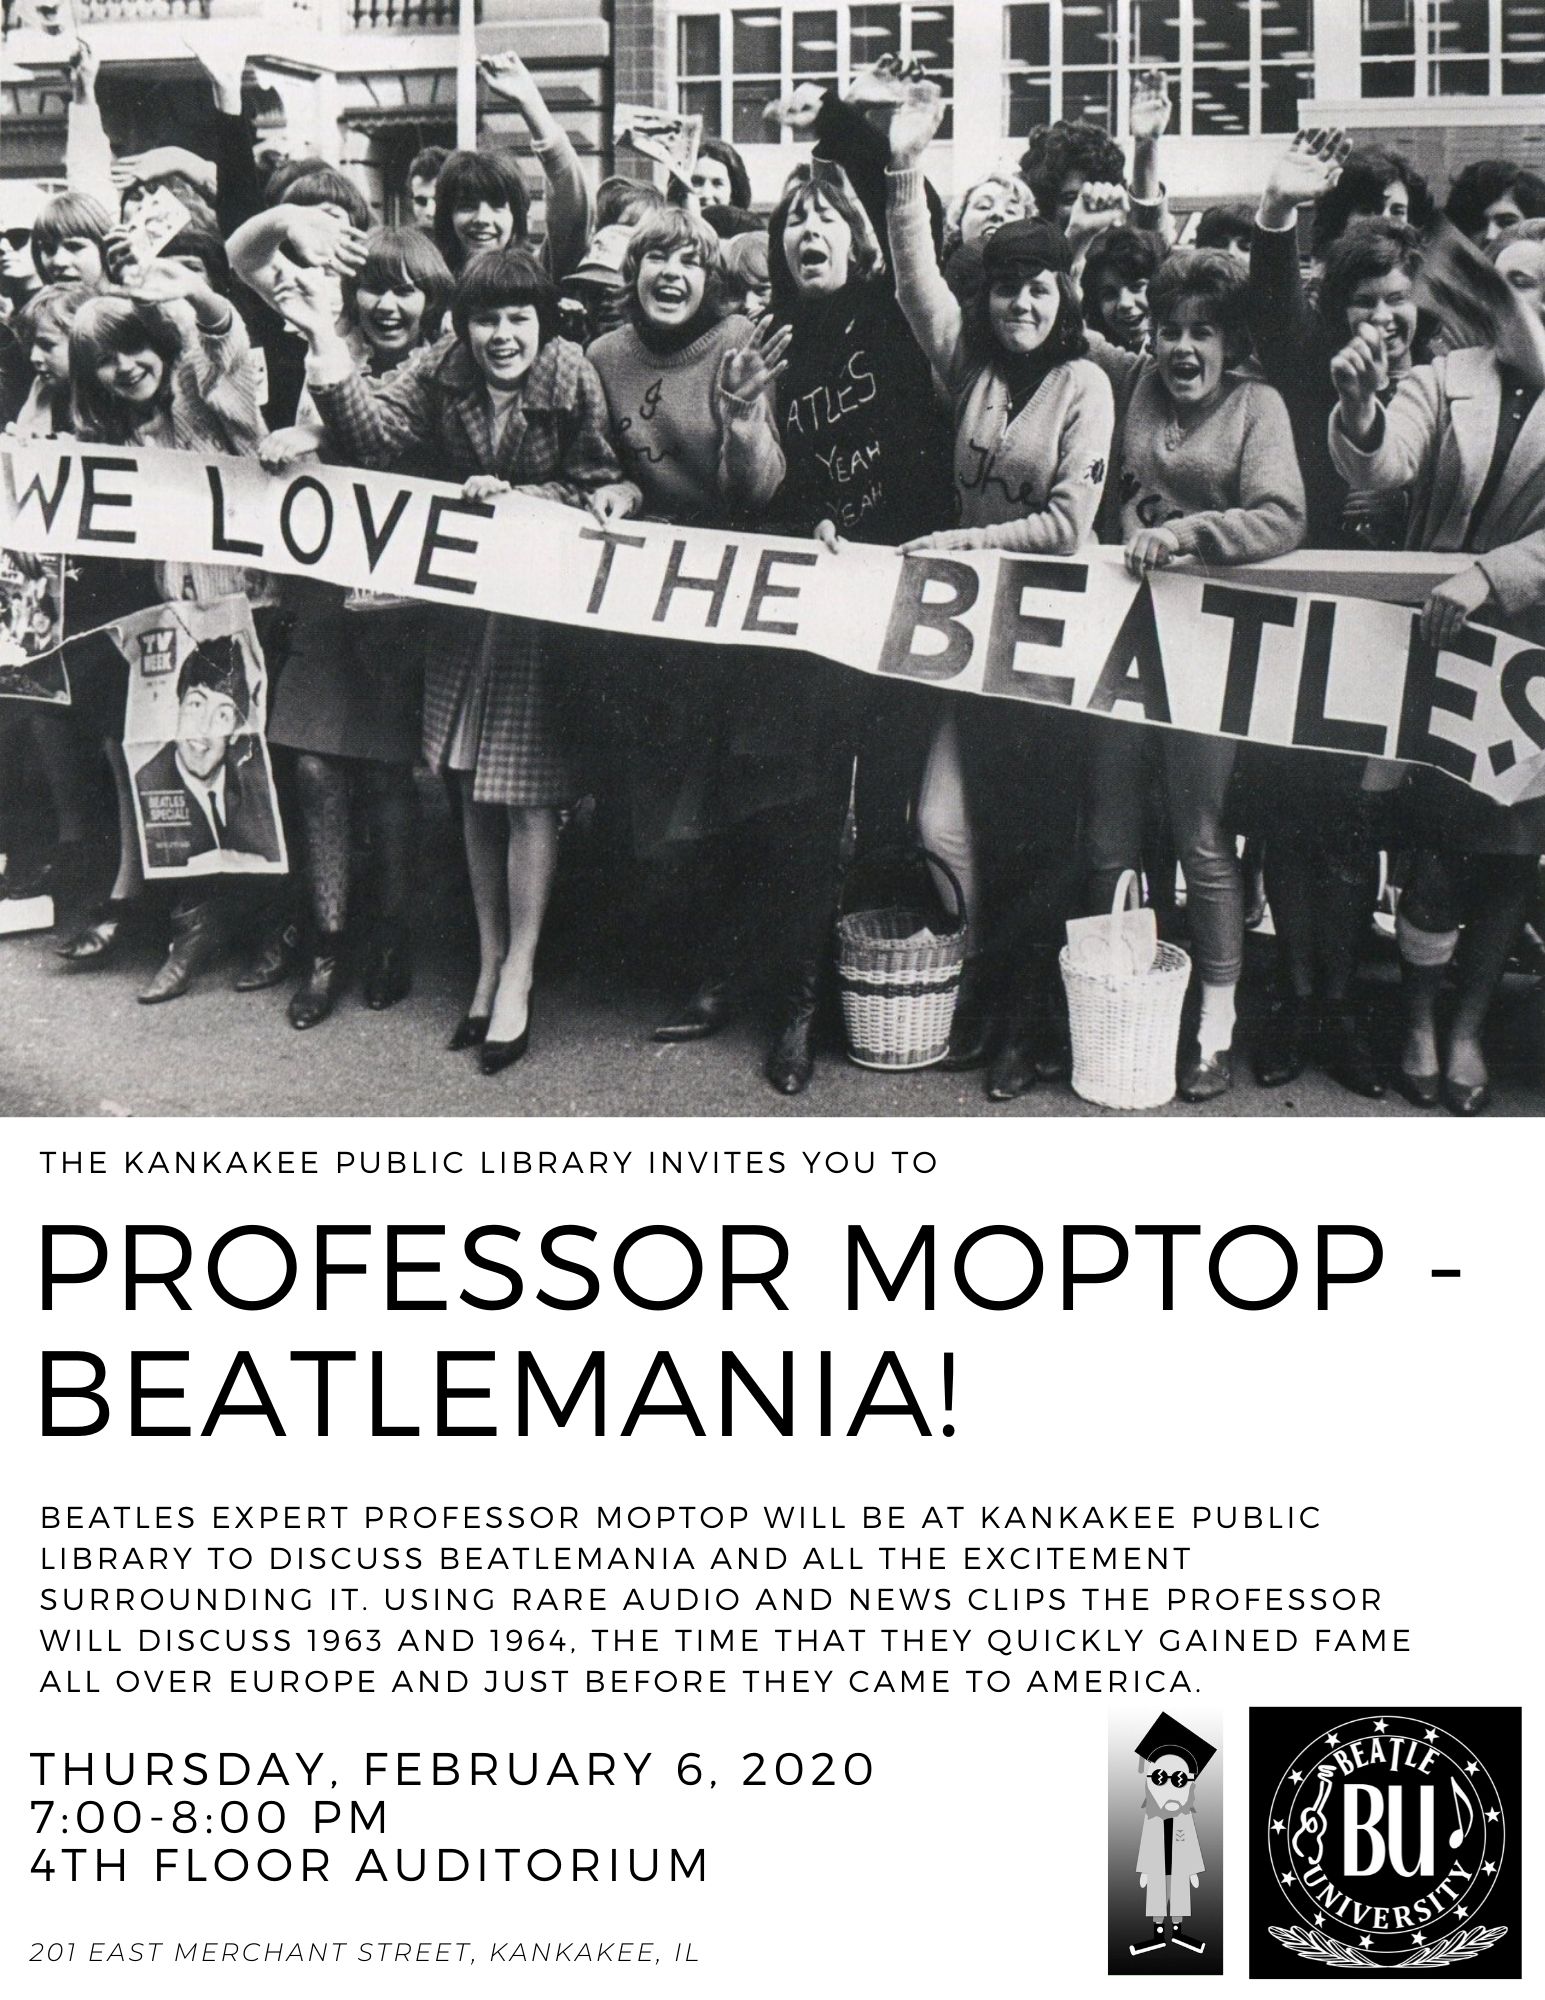 Professor Moptop - Beatlemania!